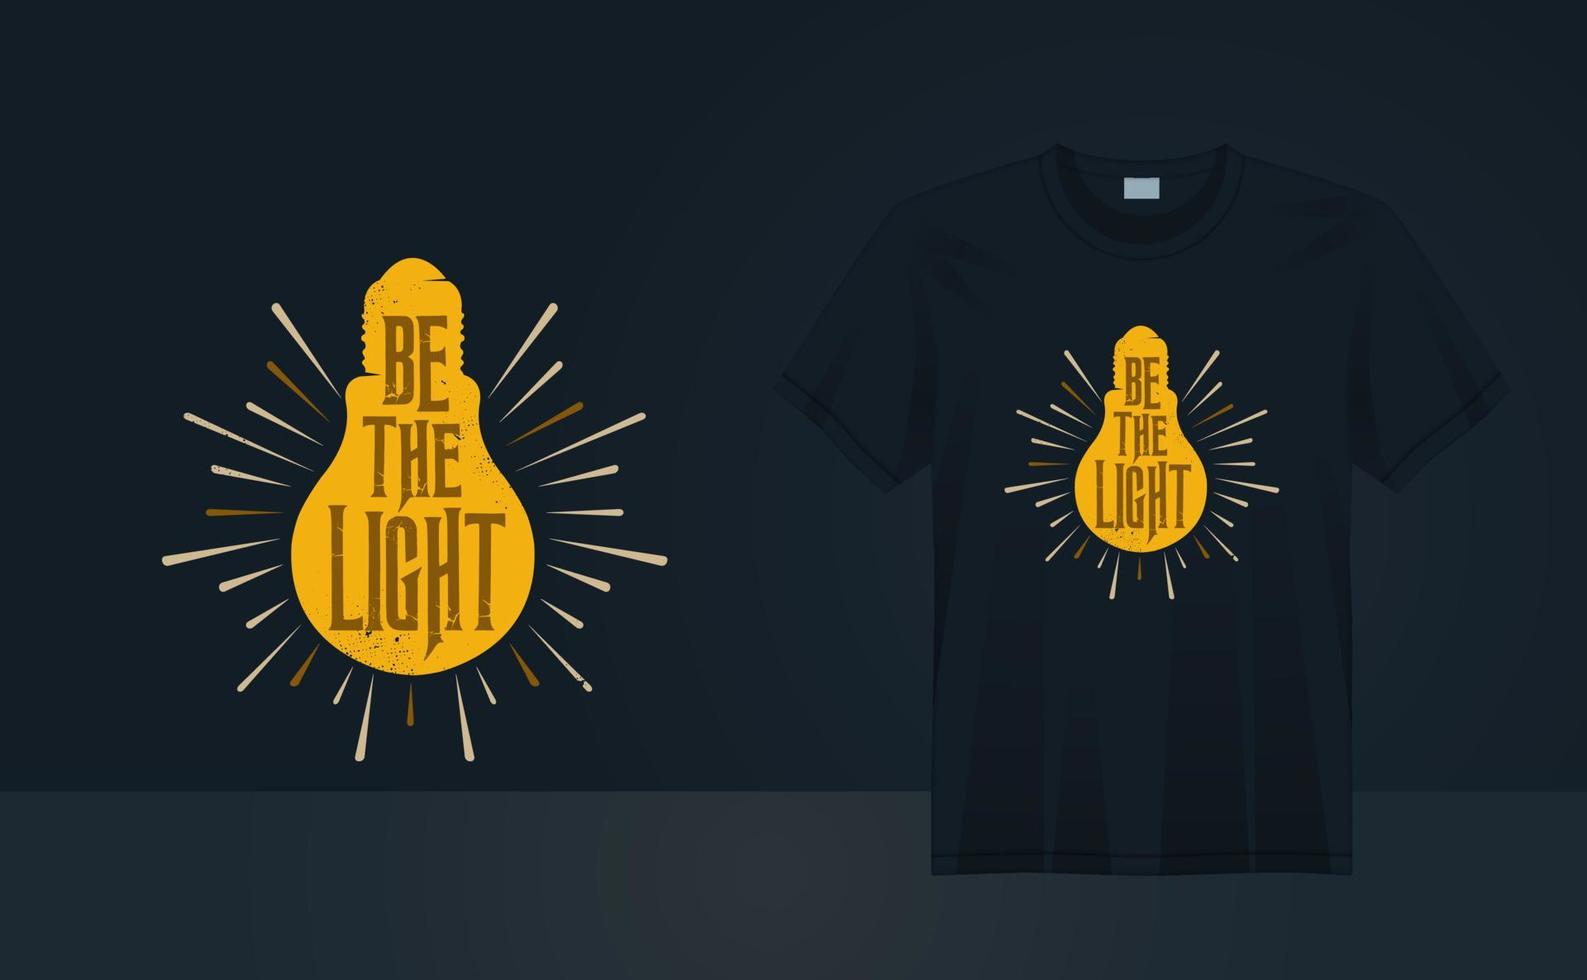 Be the Light vintage grunge t-shirt design for t-shirt printing, poster, wall art, clothing, fashion tshirt vector illustration